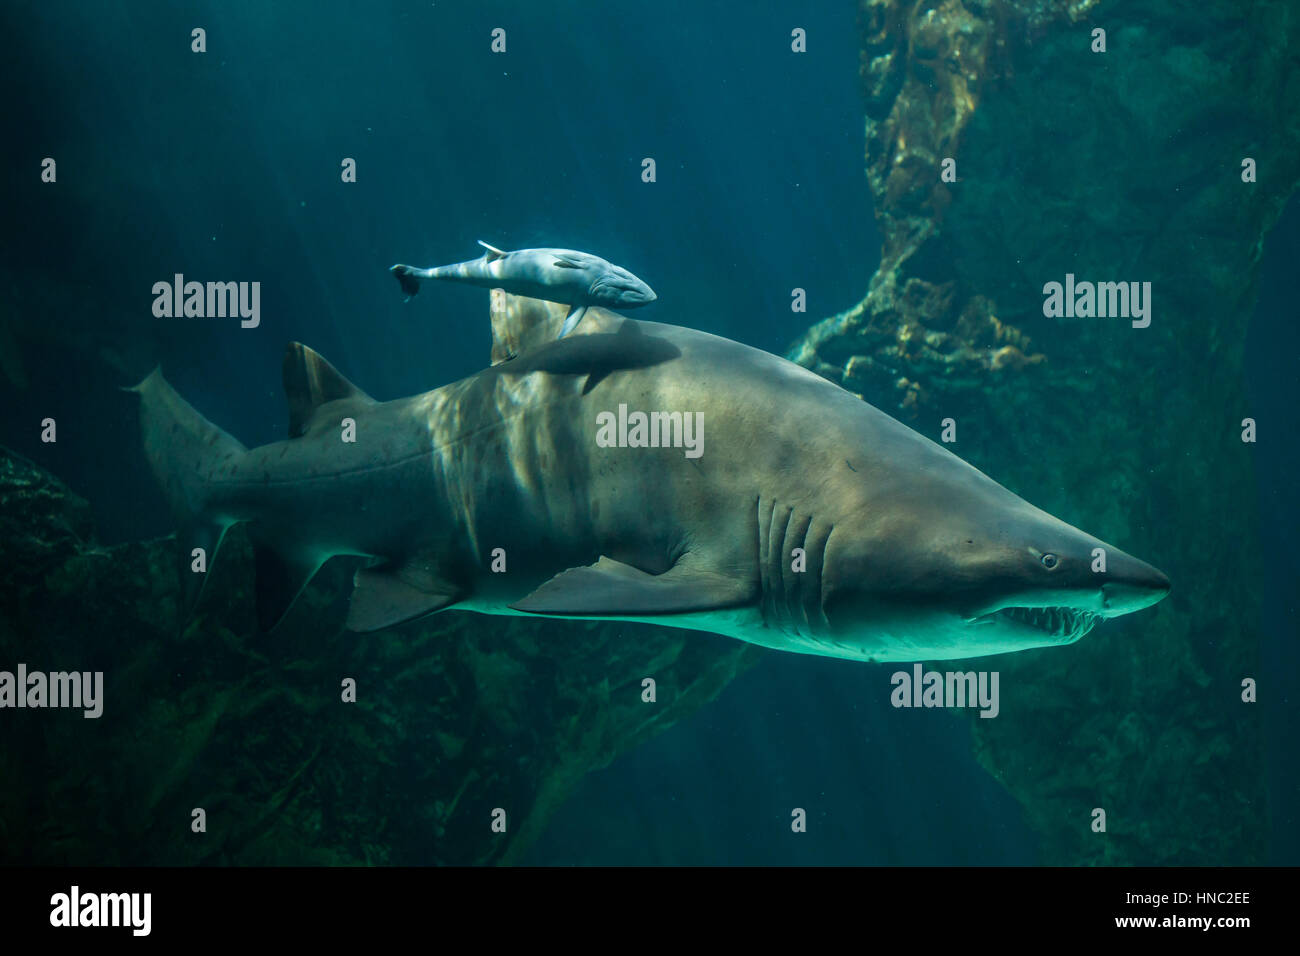 Live sharksucker (Echeneis naucrates) and the sand tiger shark (Carcharias taurus), also known as the grey nurse shark. Stock Photo